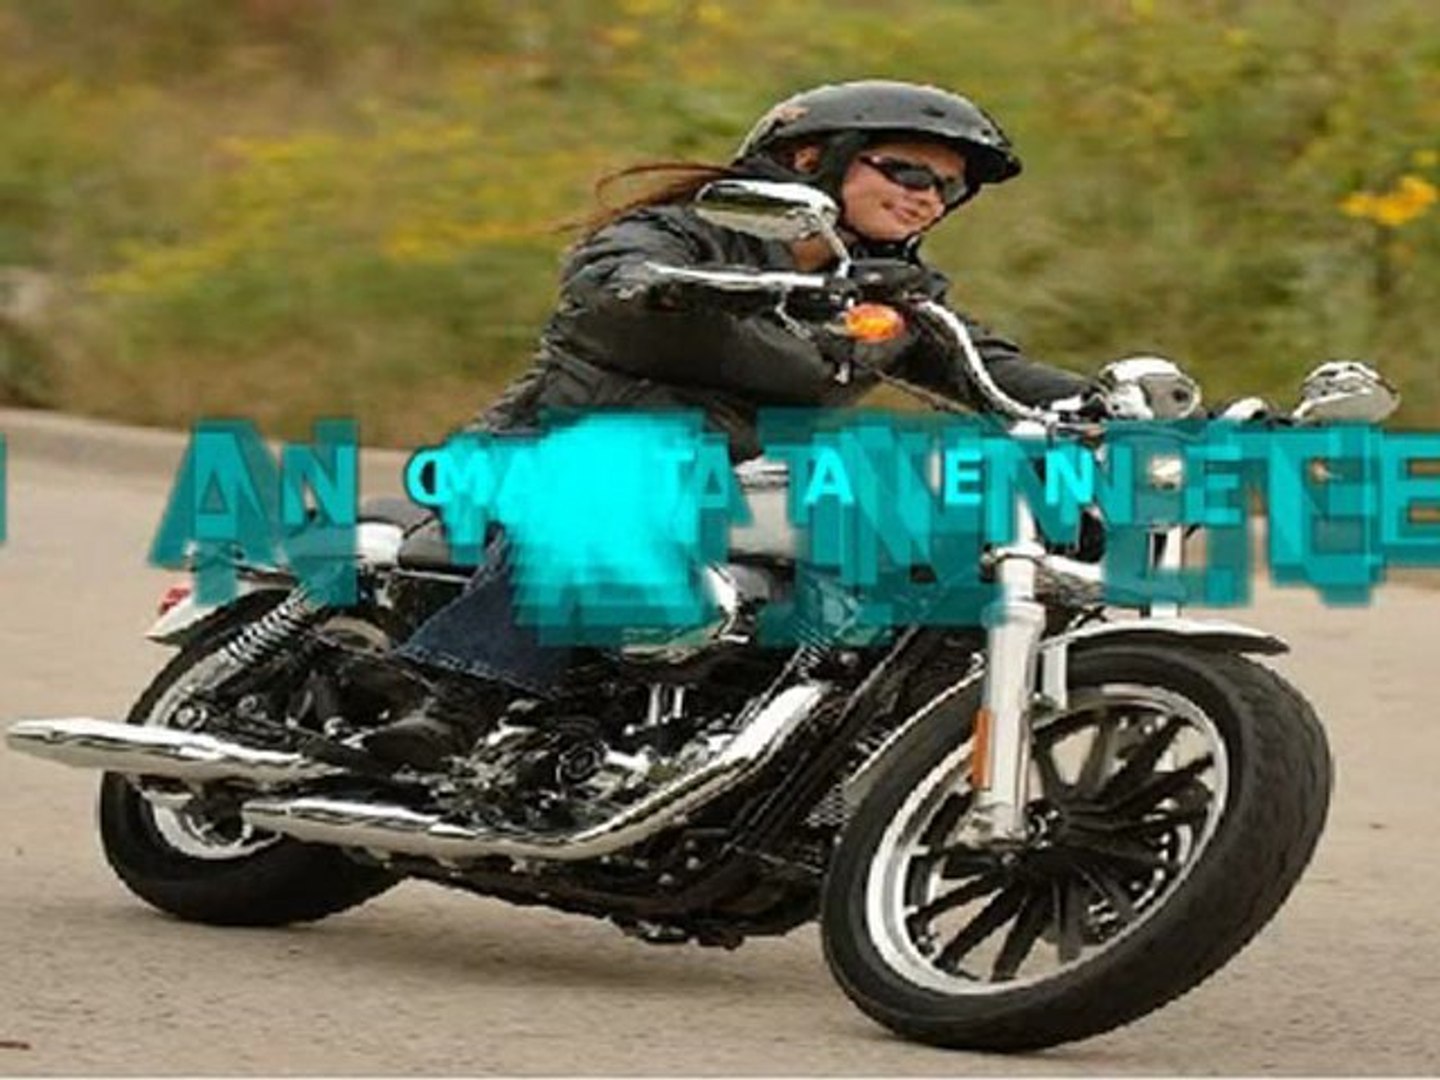 Harley Davidson Motorcycles For That Adrenalin High